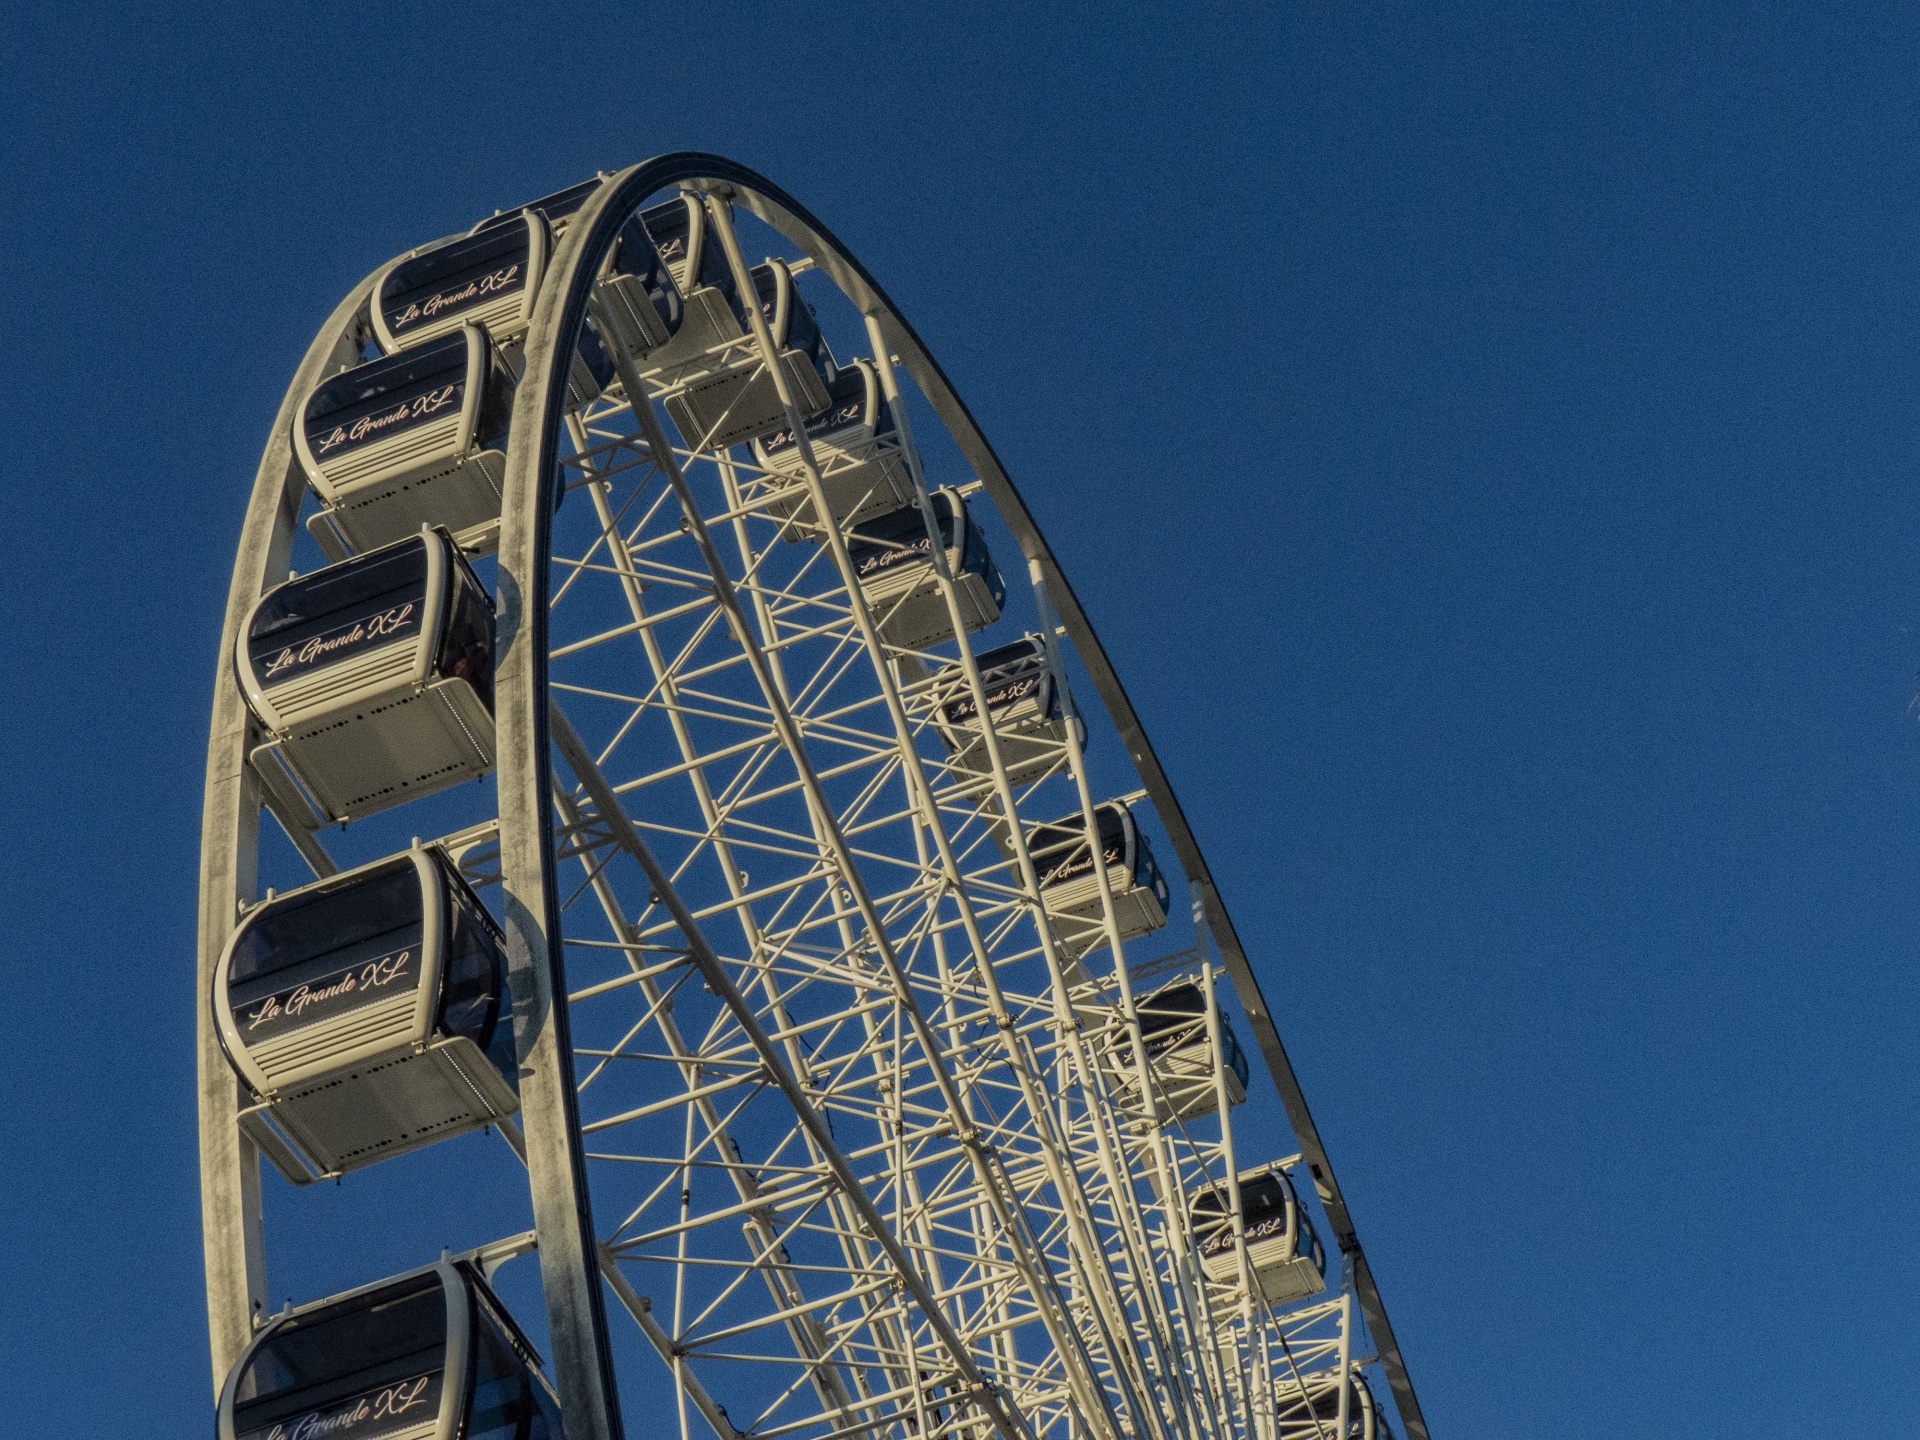 Enclosed car Ferris wheel against a clear blue sky